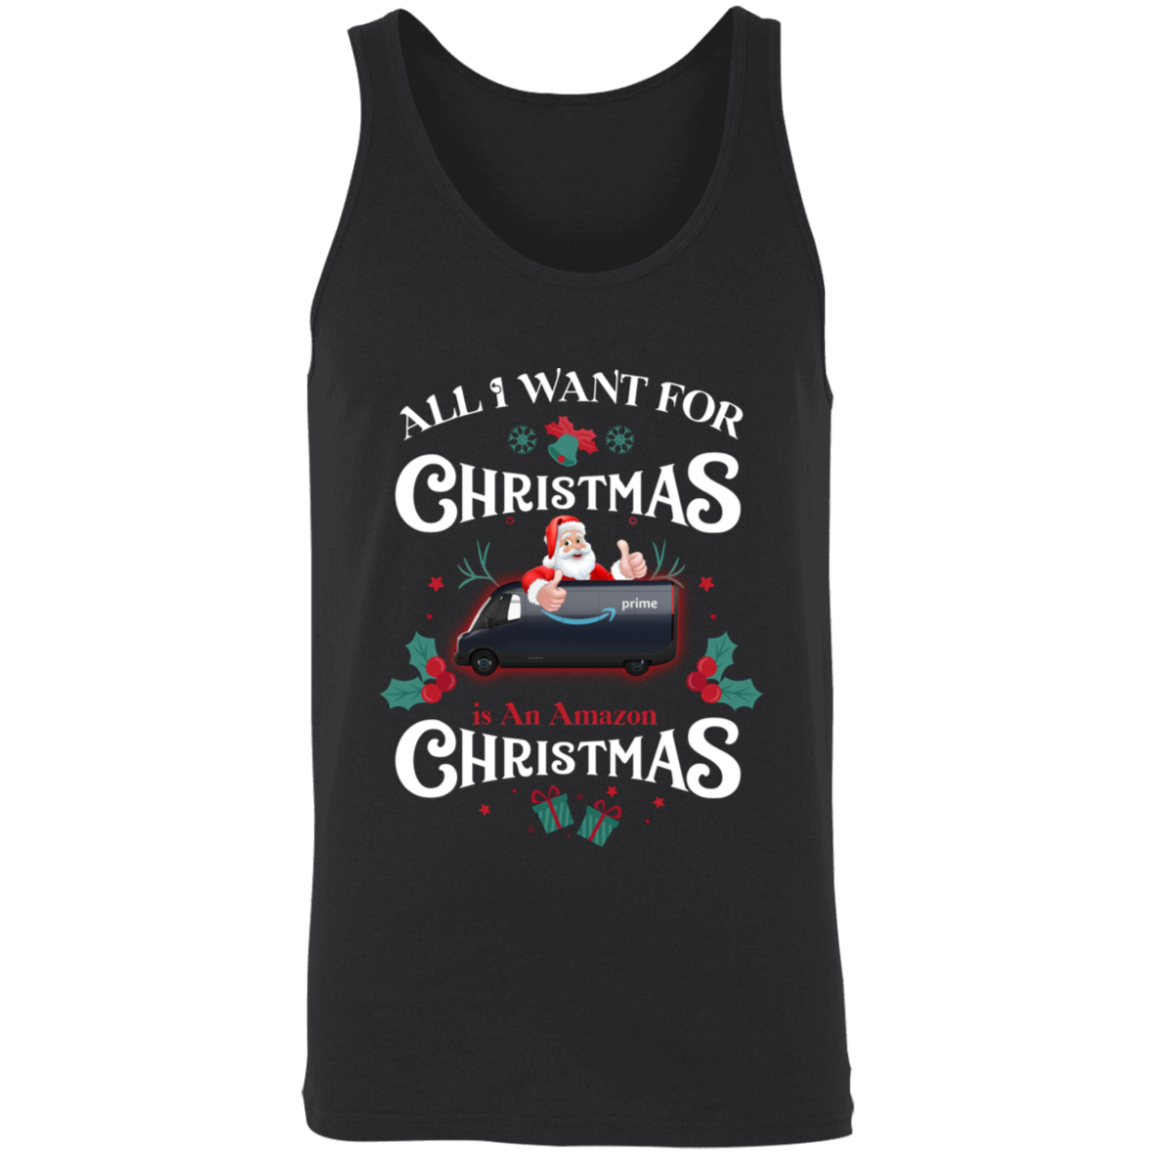 All I want for Christmas is An Amazon Christmas Apparel